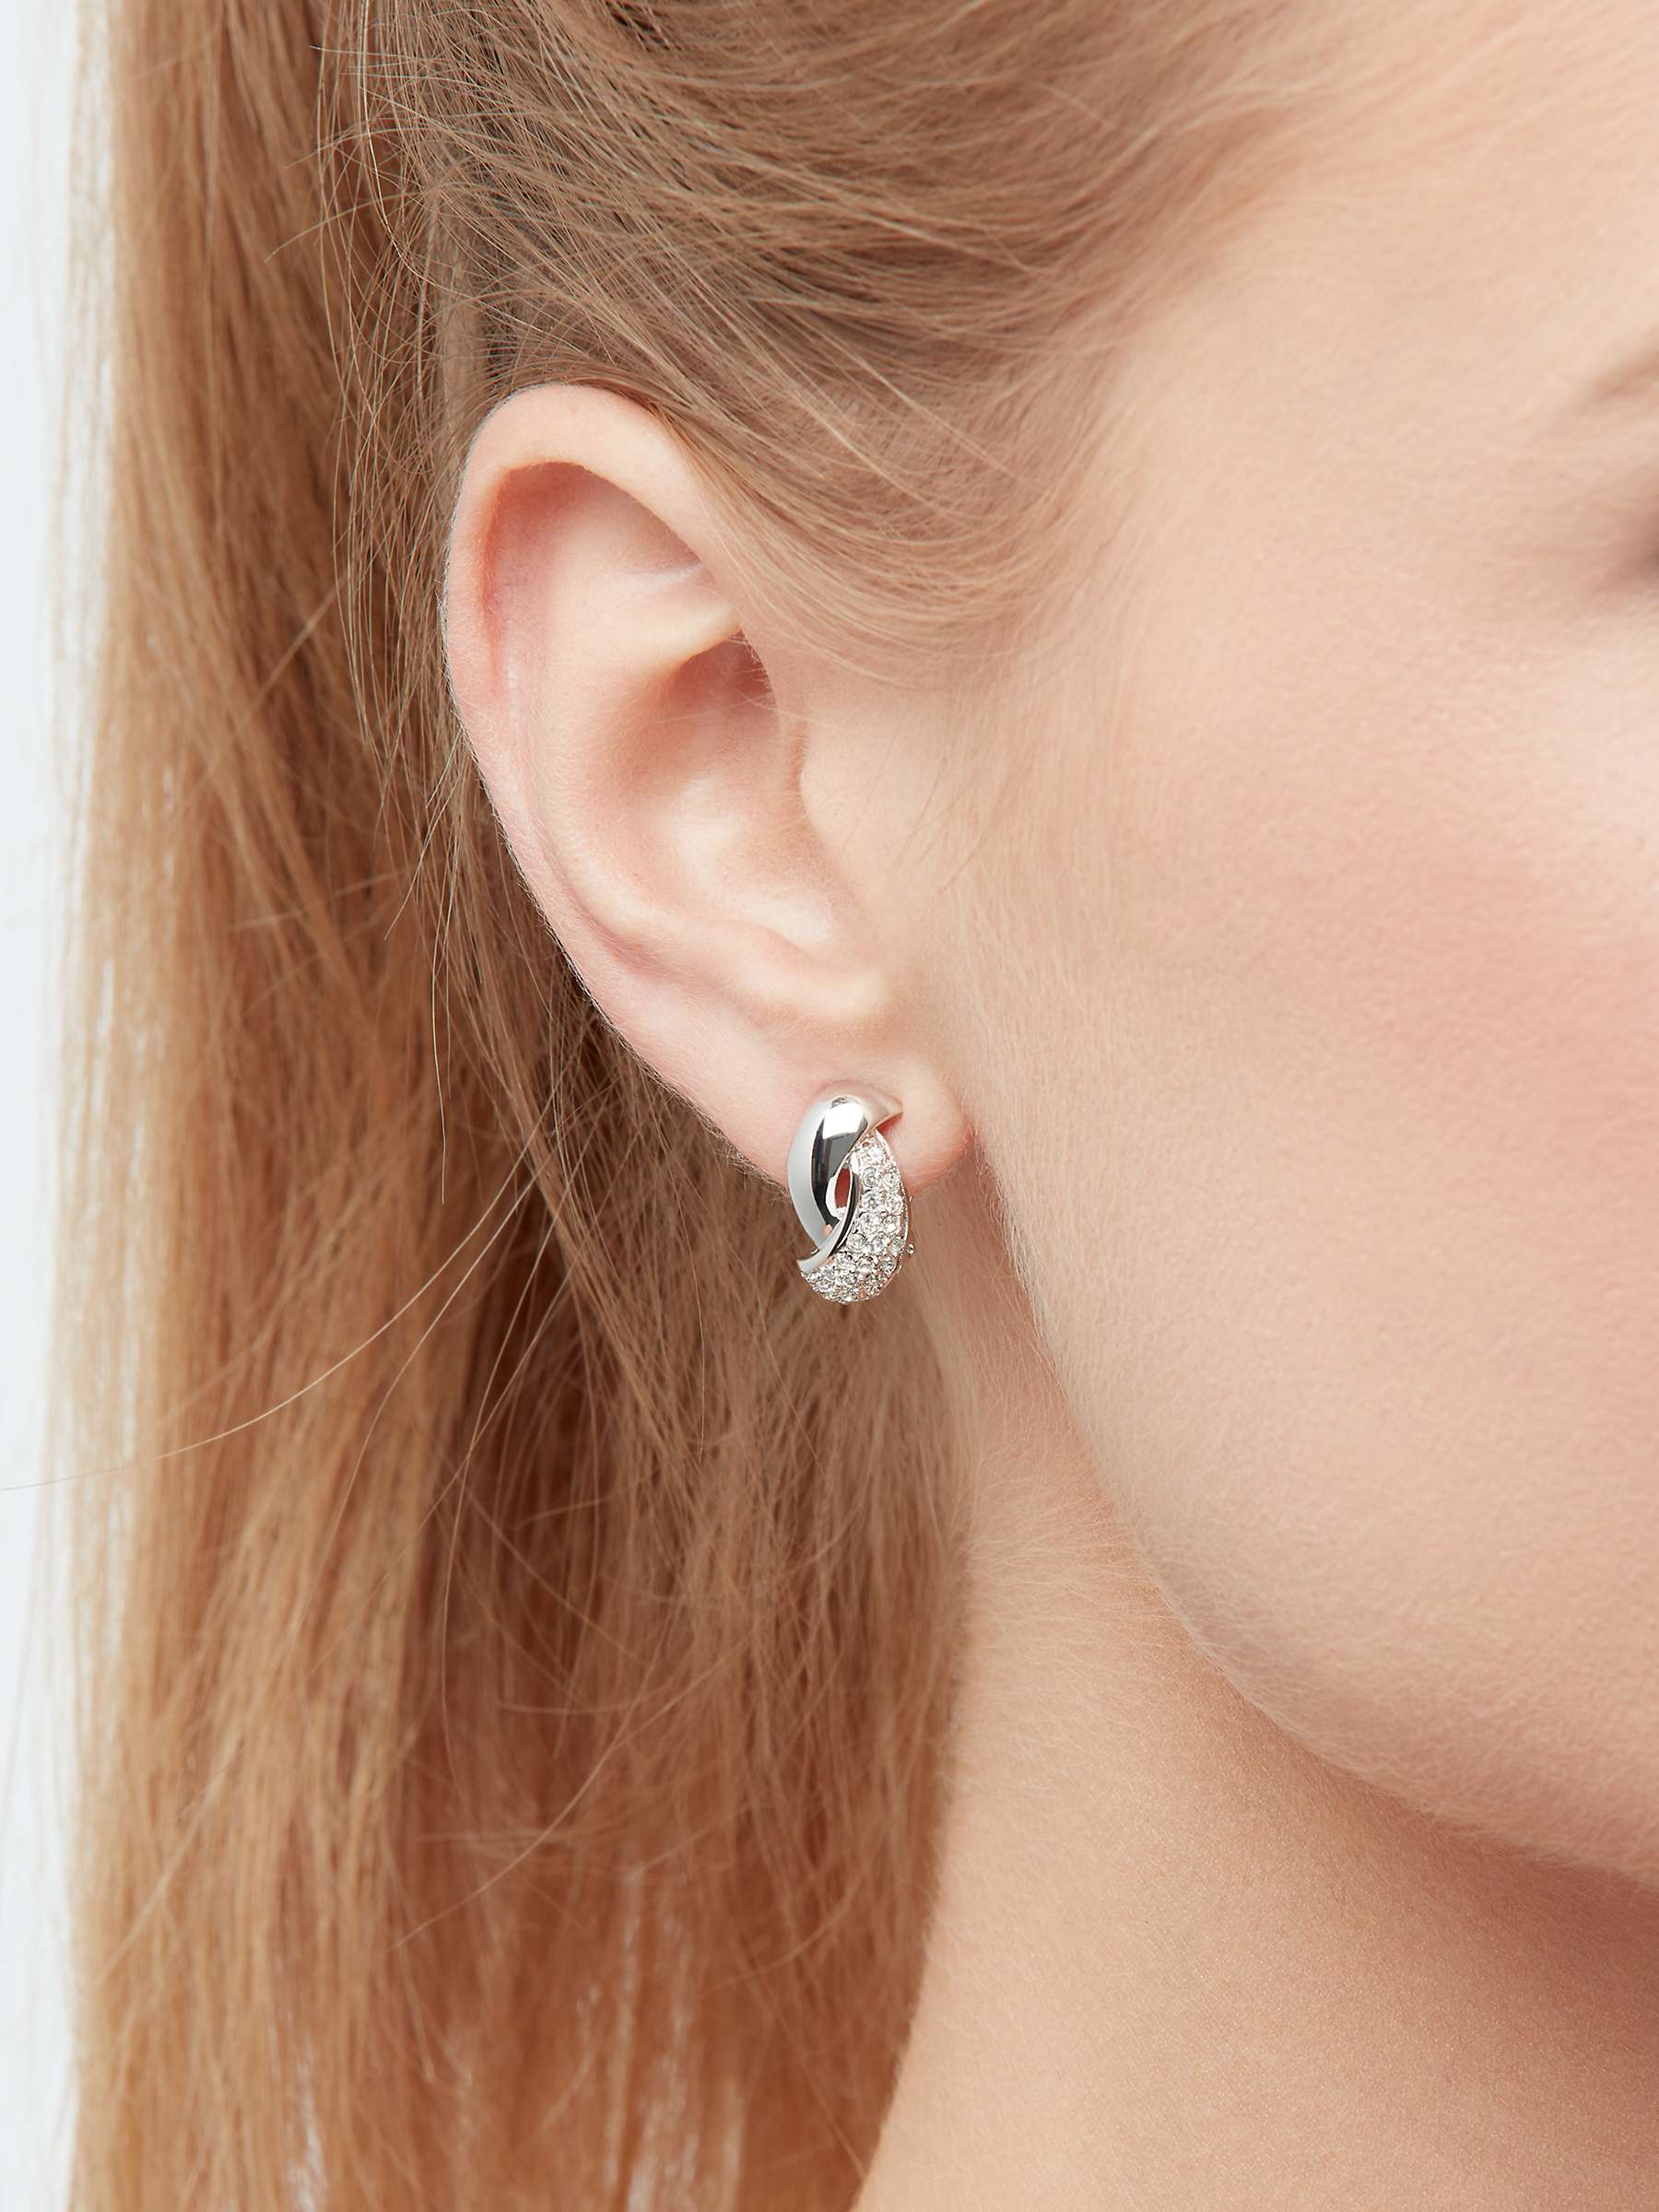 Buy Emma Holland Swarovski Crystal Twist Clip-On Stud Earrings Online at johnlewis.com